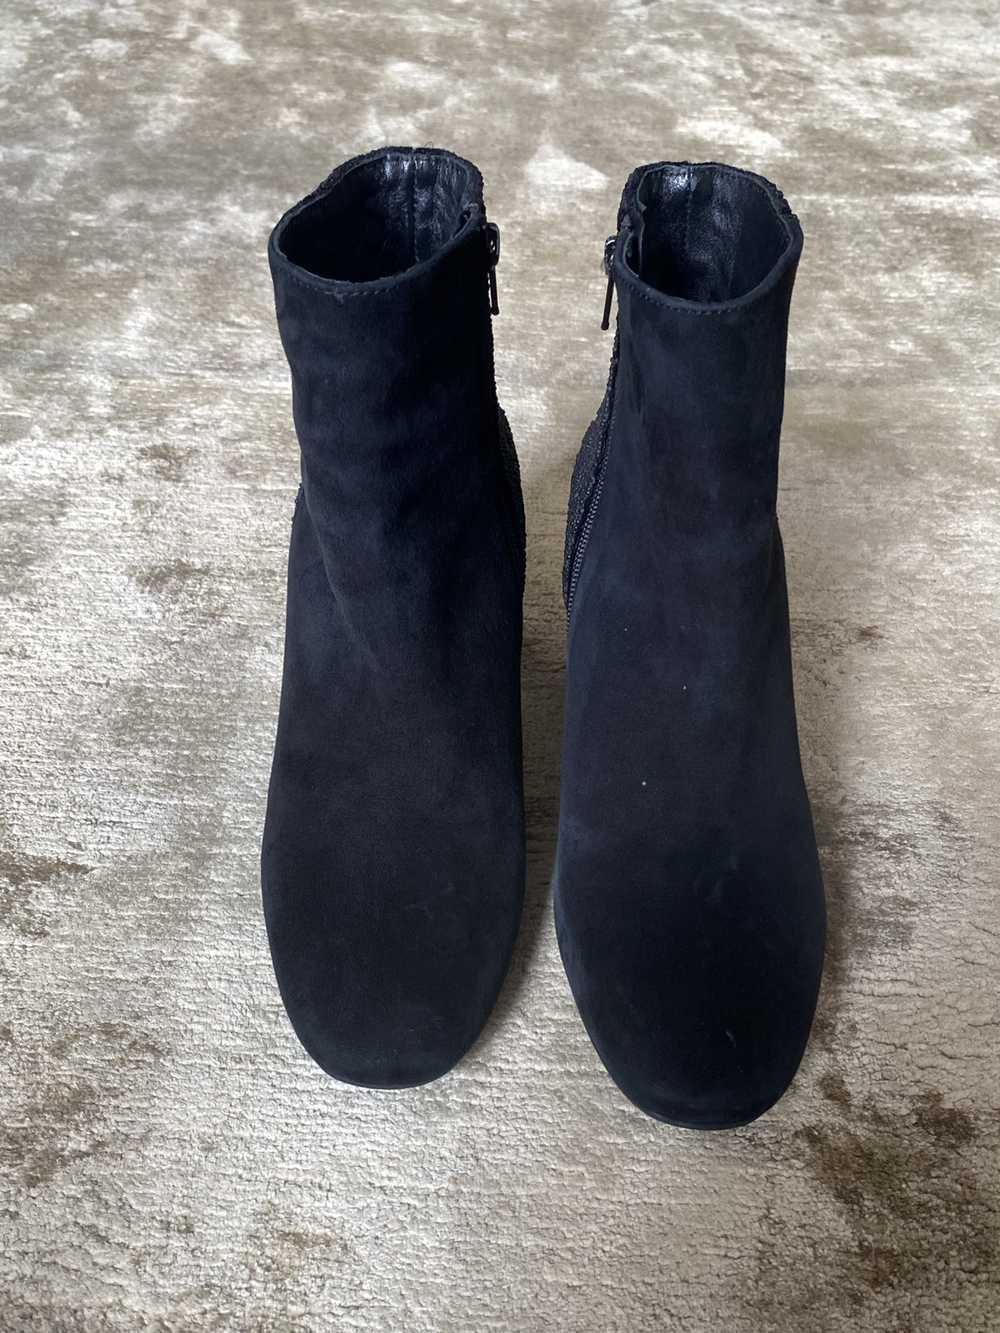 Barneys New York Black Suede/Beaded, Heeled Boots - image 5